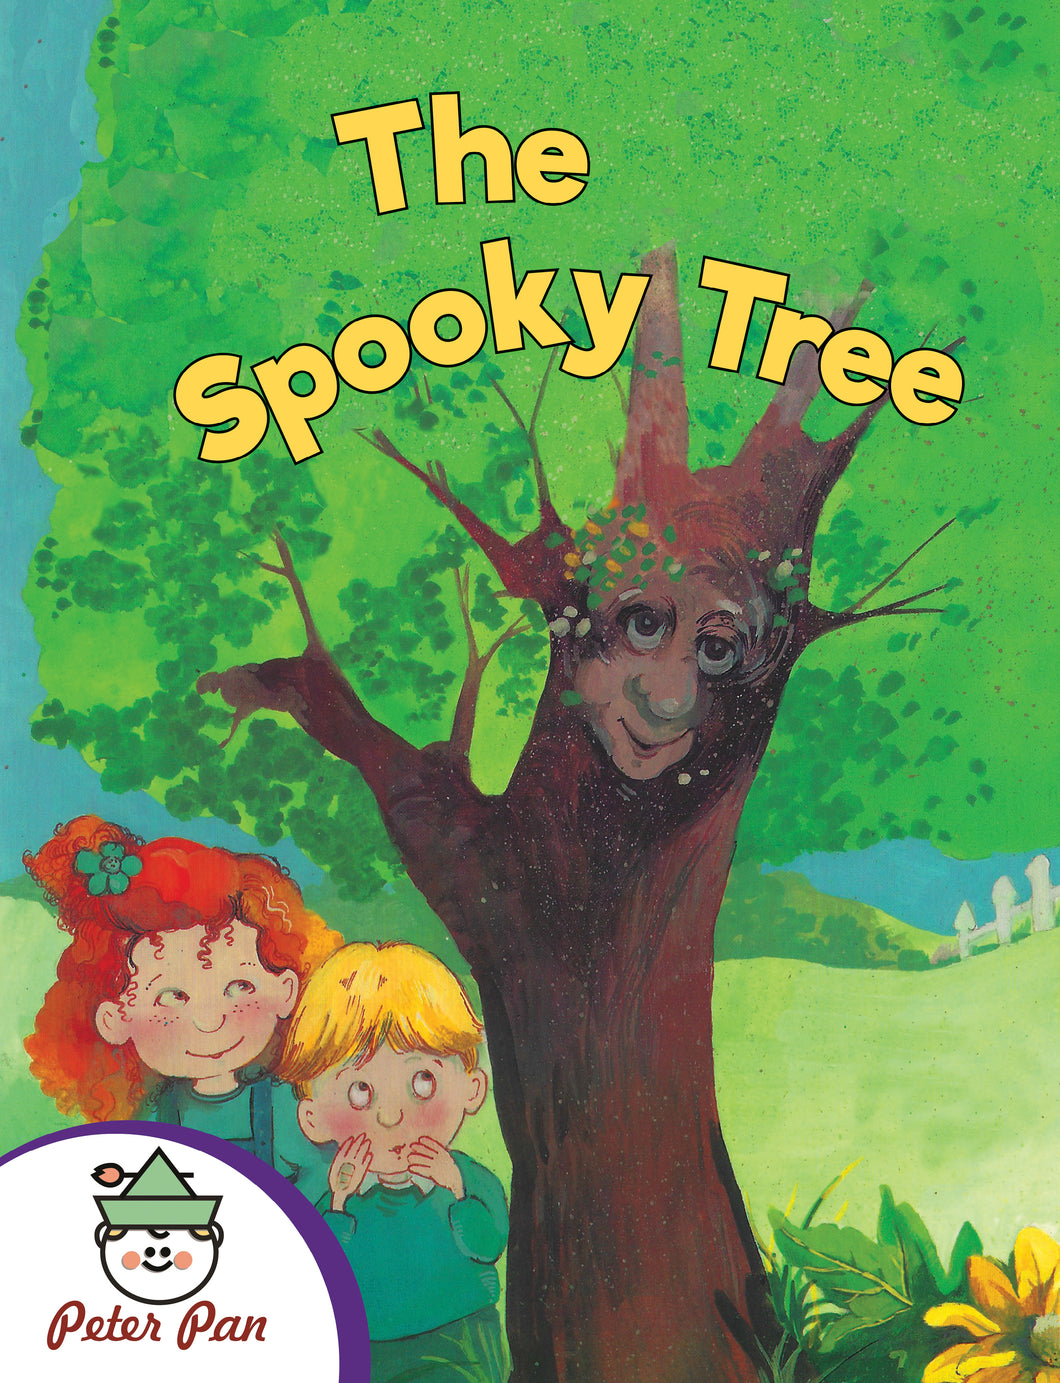 The Spooky Tree